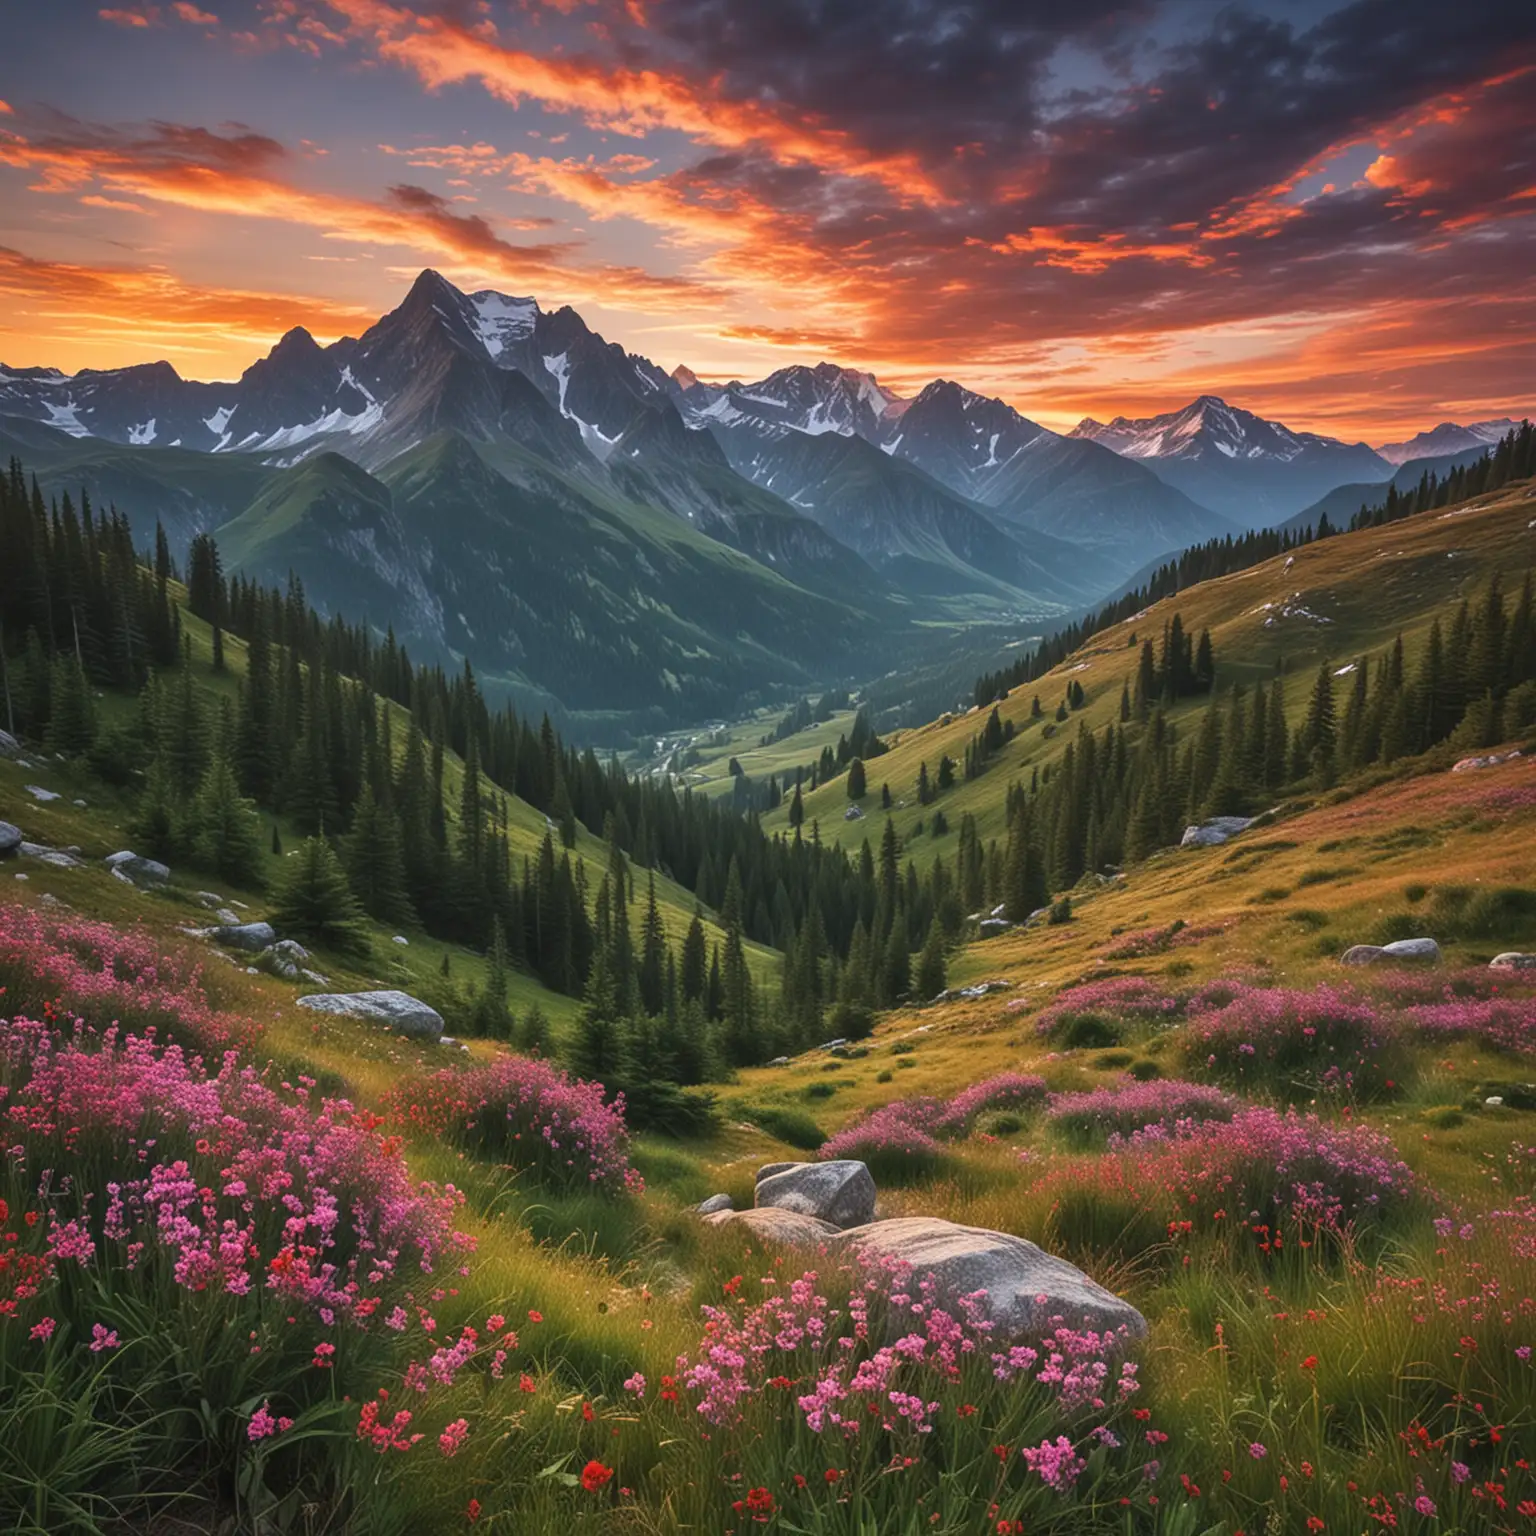 Peaceful Mountain Landscape Inspiring Spiritual Wellbeing and Manifestation